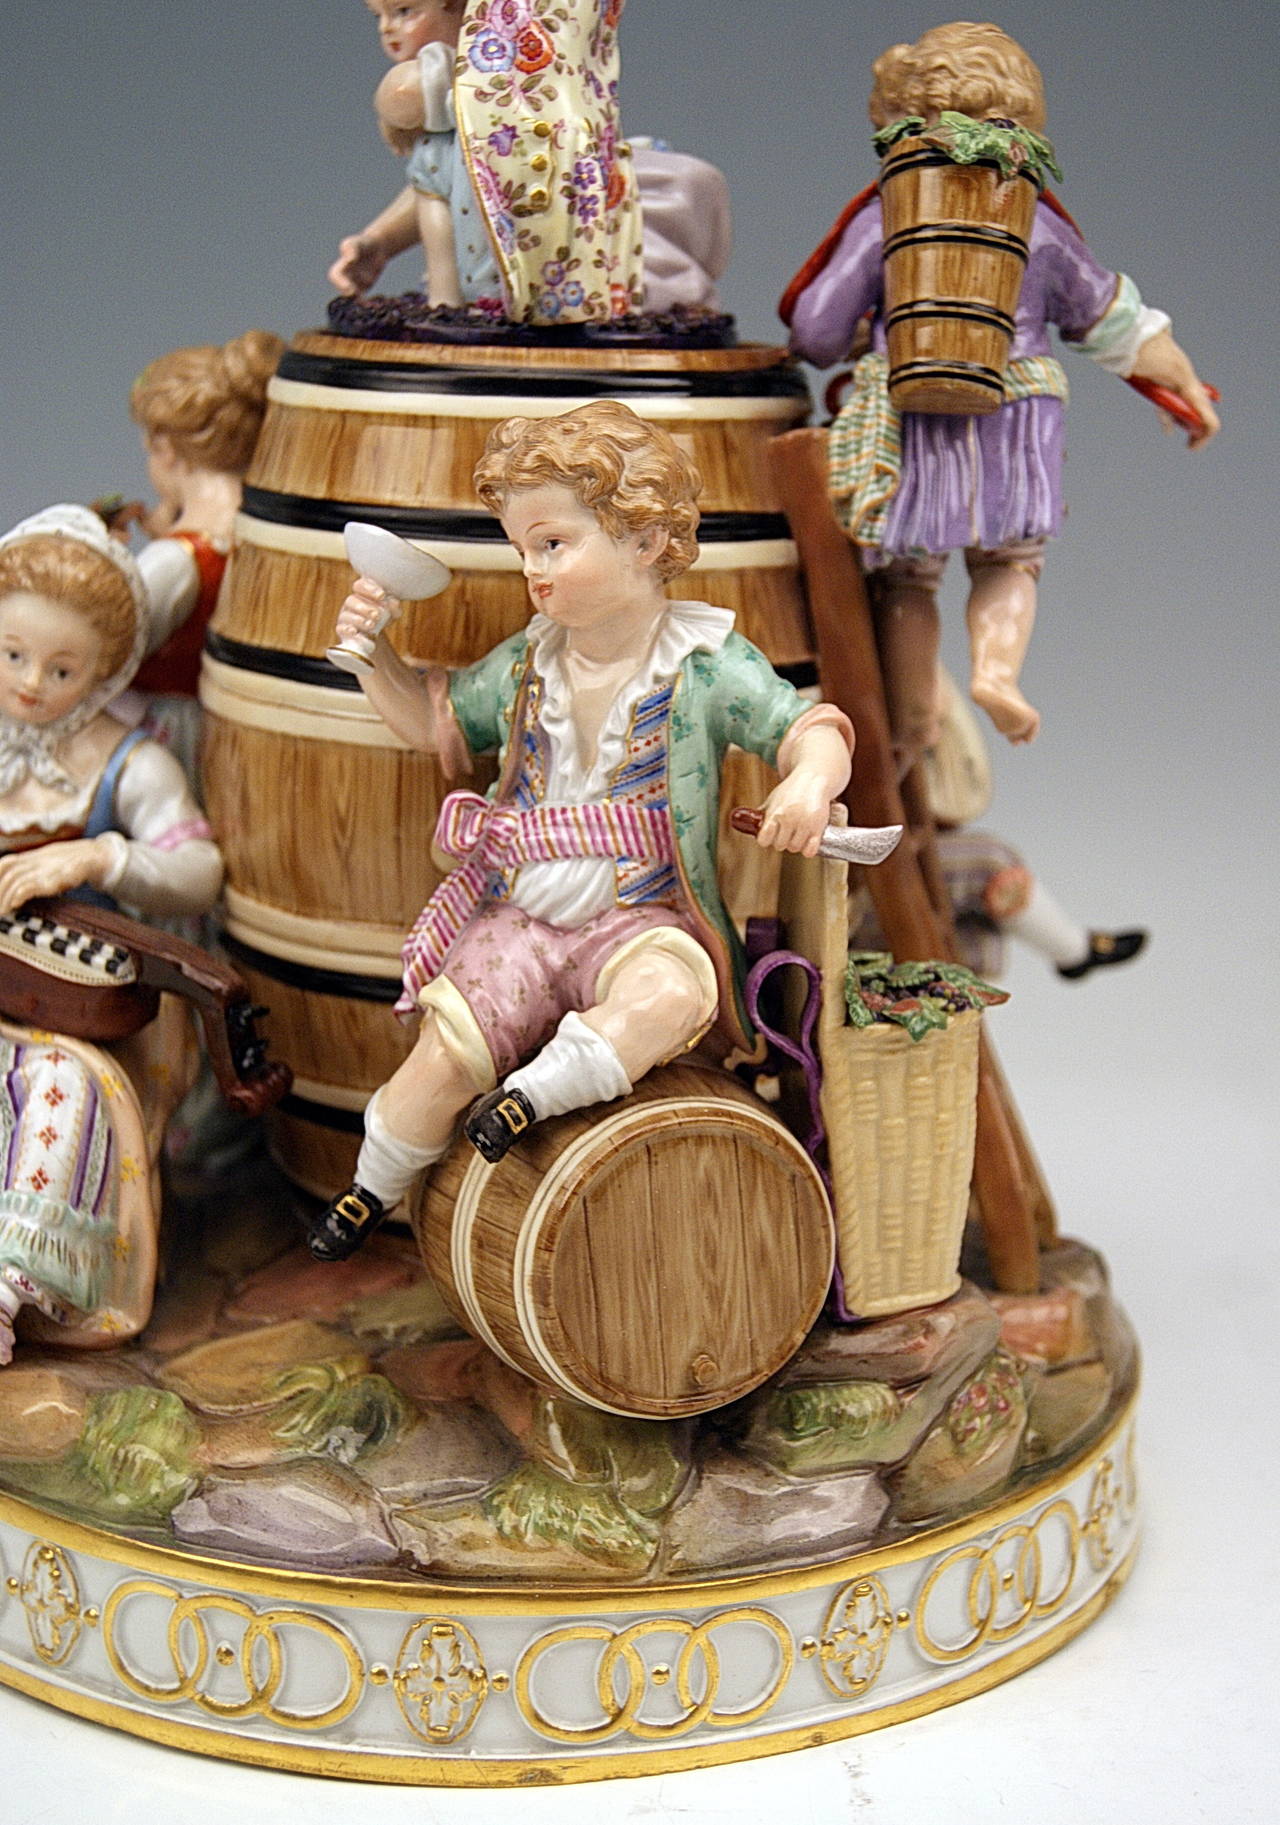 Mid-19th Century Meissen Porcelain Children and Wine Cask Figure by Schoenheit, circa 1860